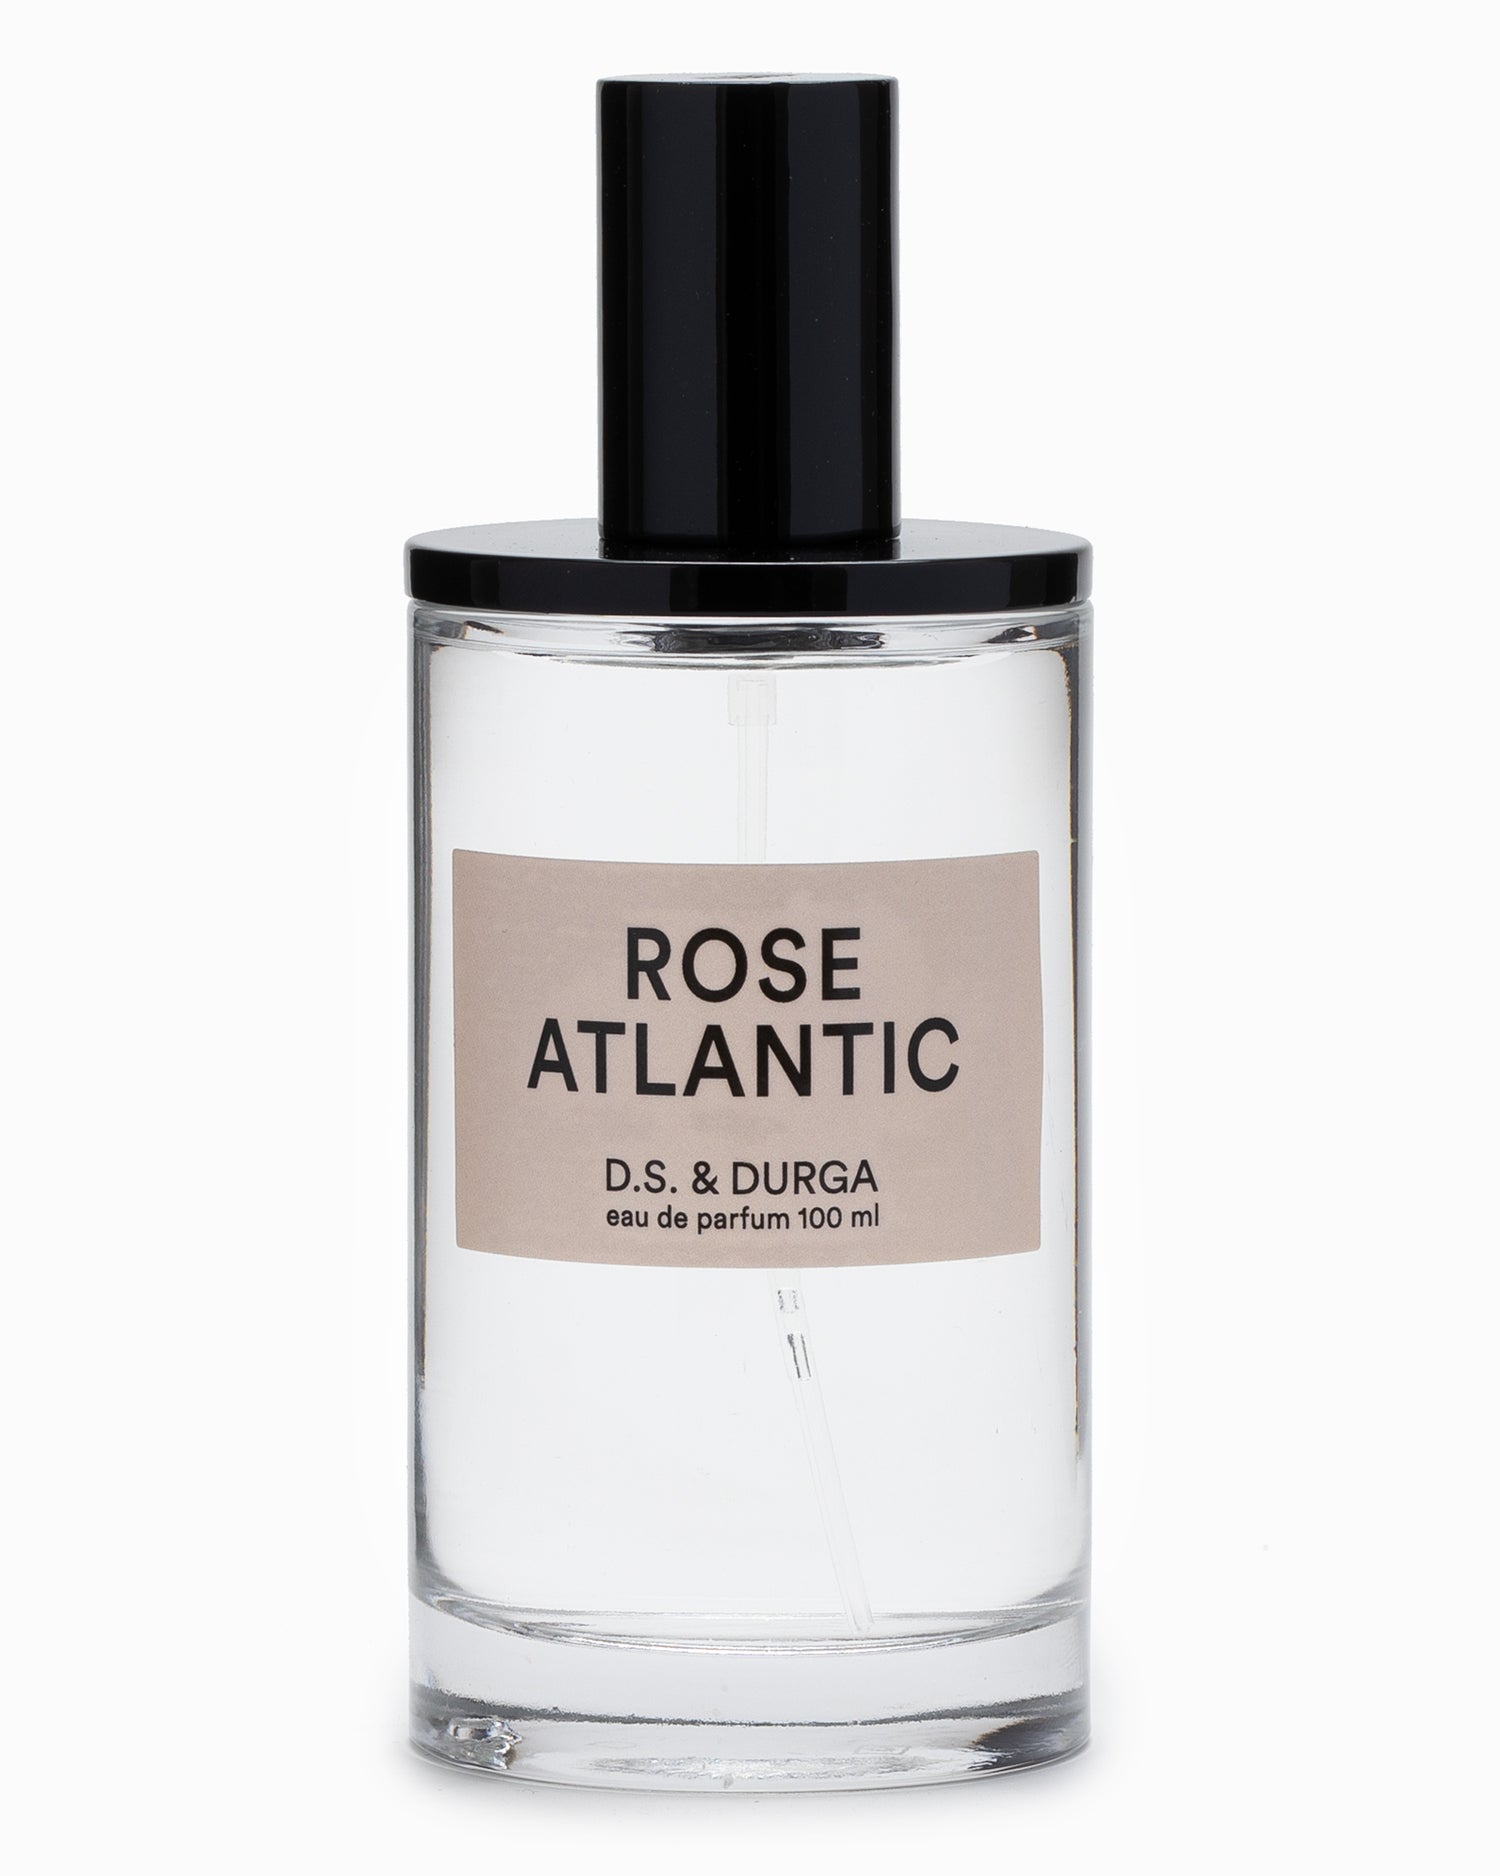 Rose Atlantic 100ml - D.S. & Durga